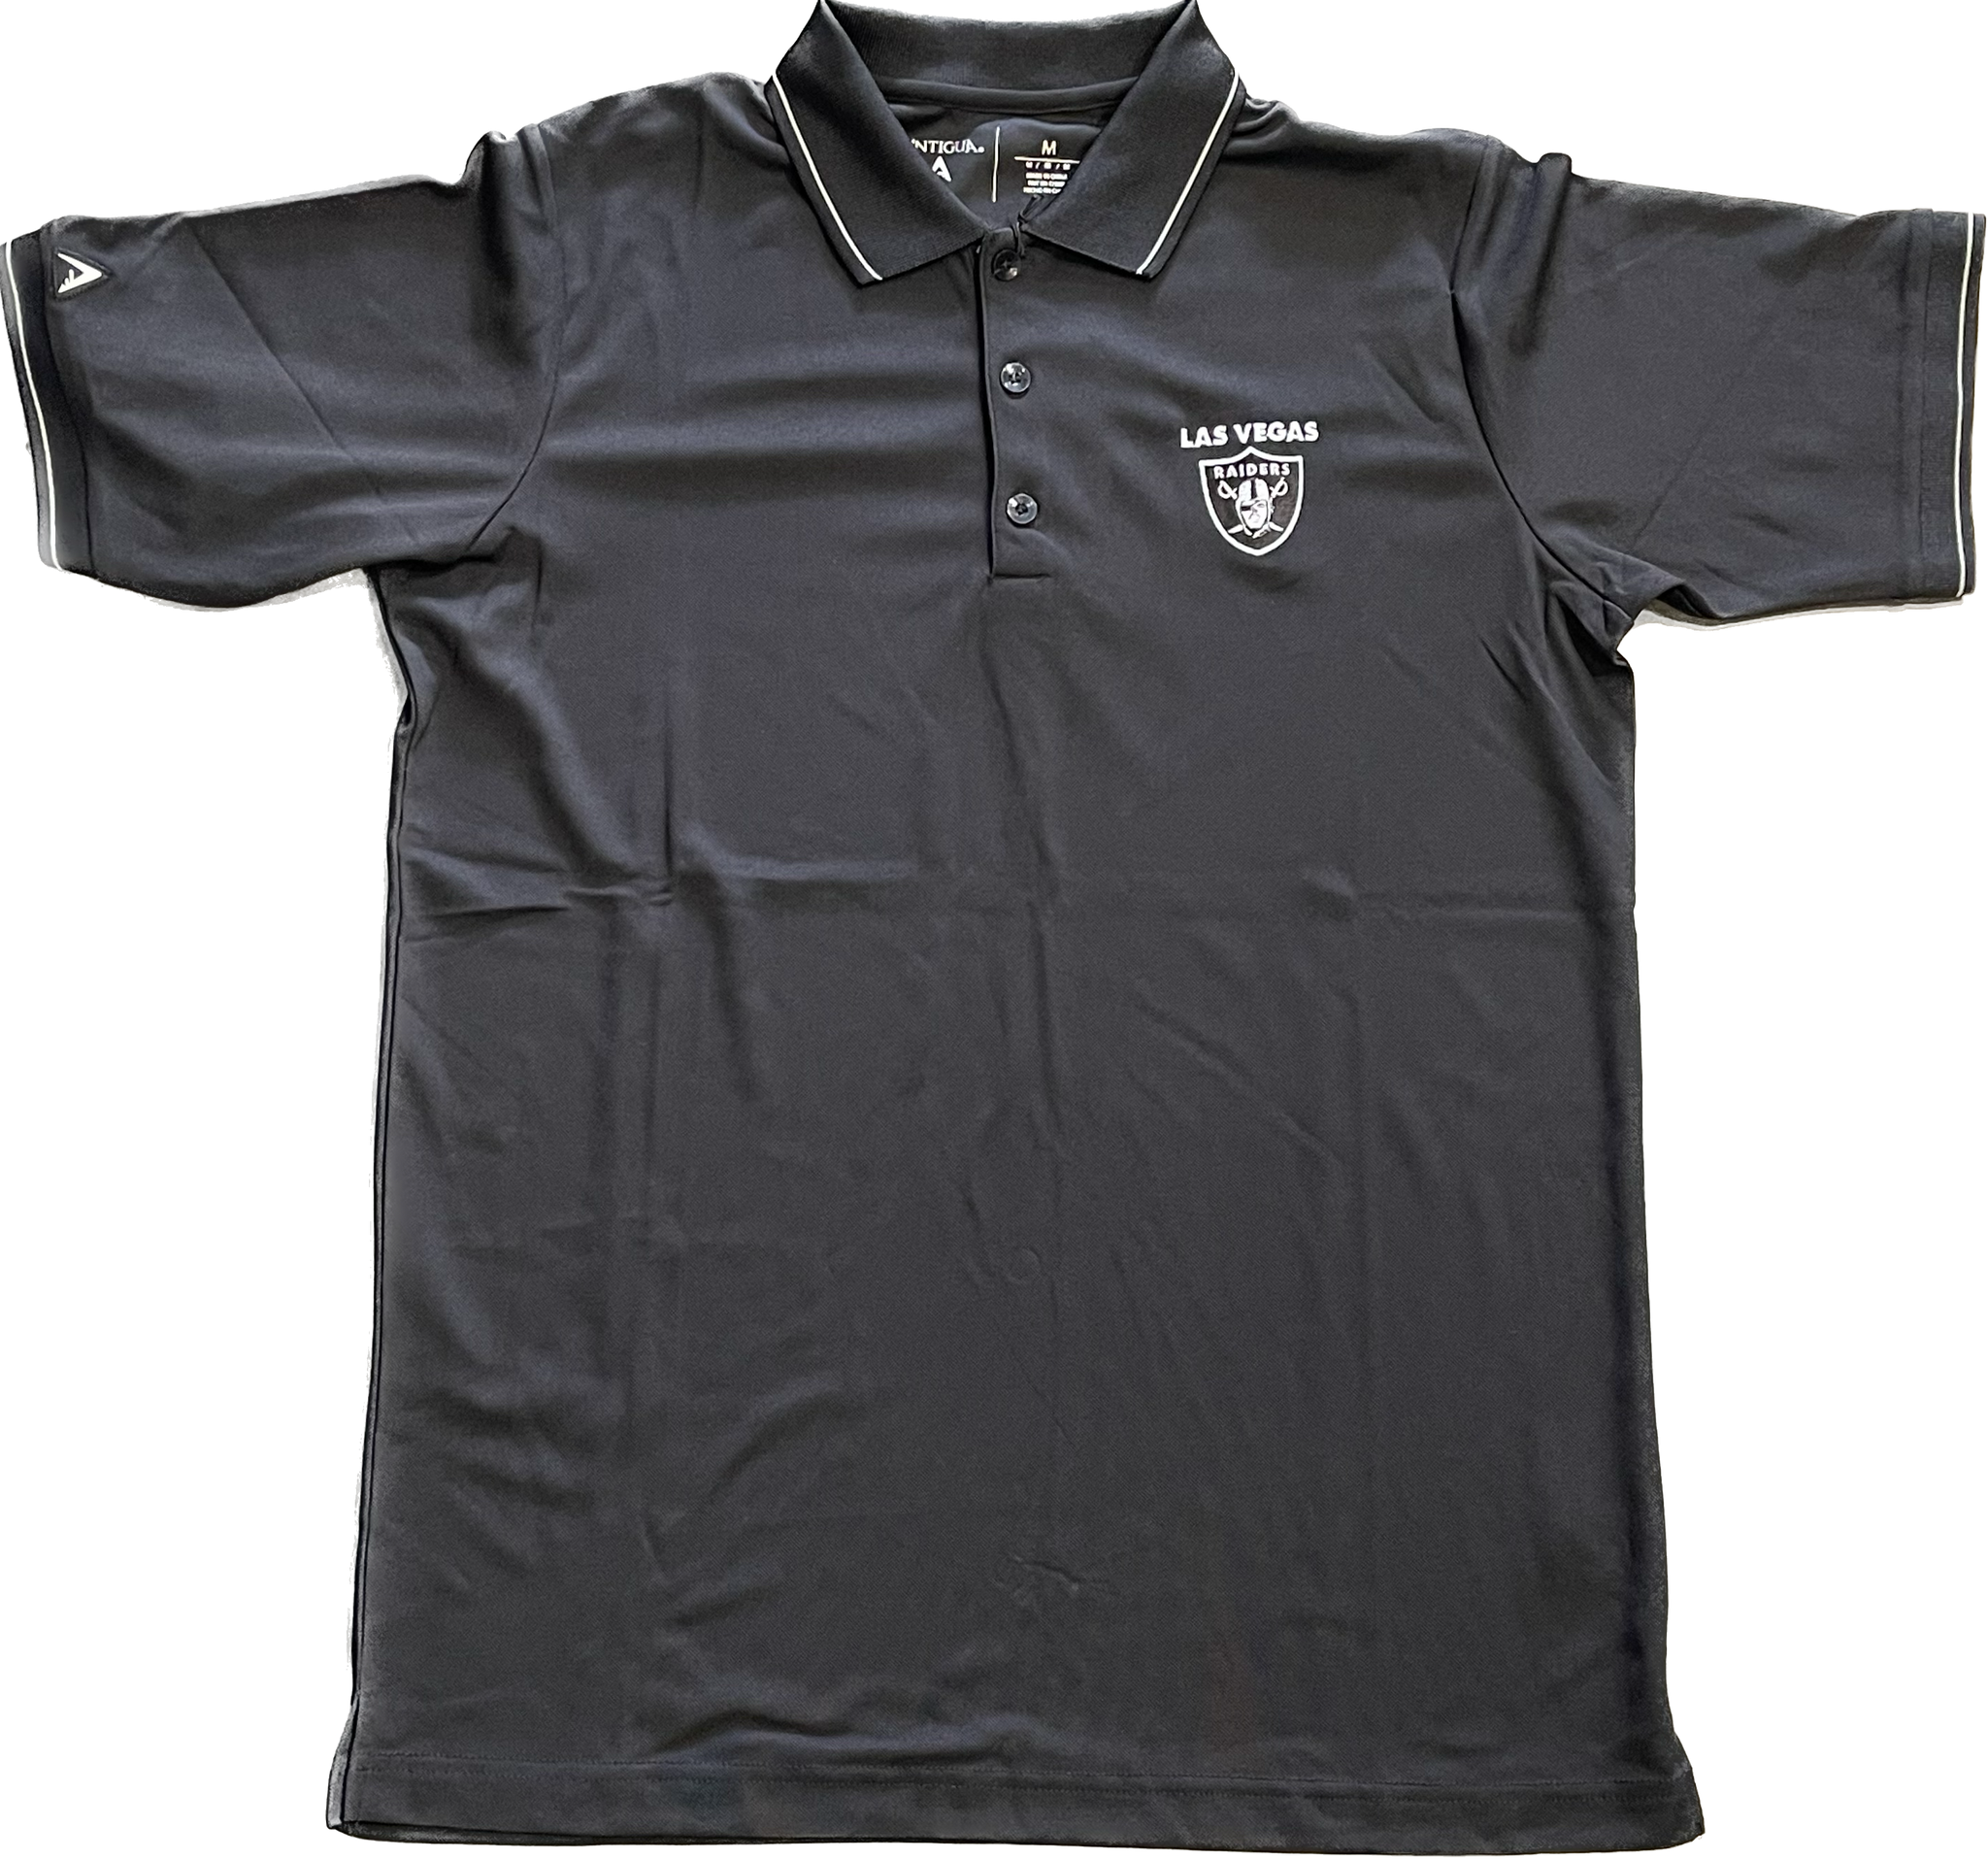 Las Vegas Raiders Men's Affluent Polo Shirt